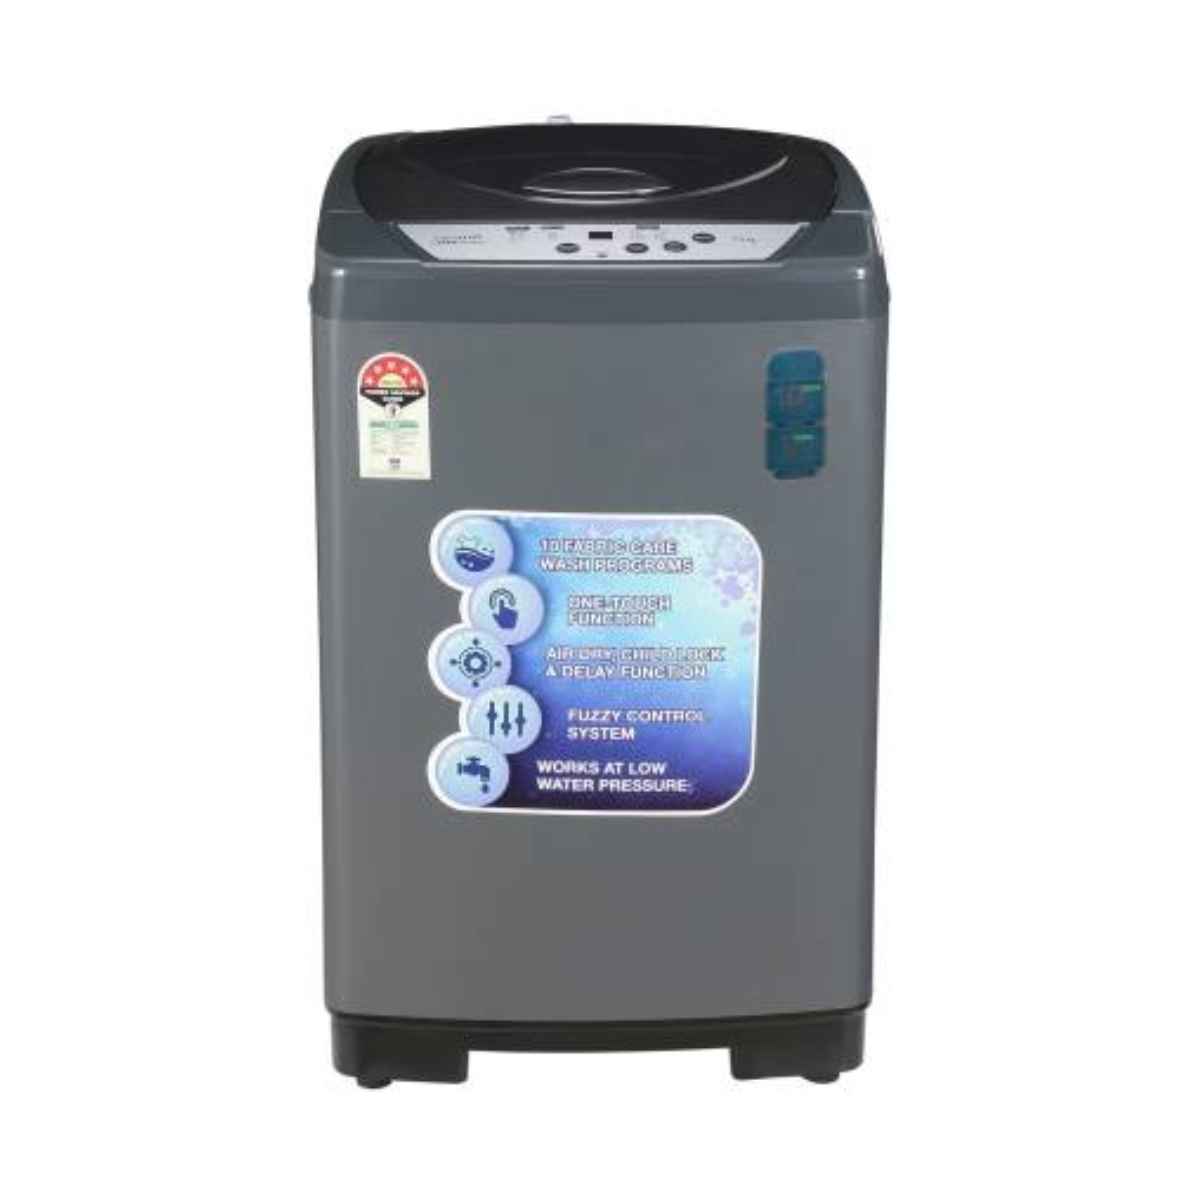 क्रोमा 7.5 kg Fully Automatic टॉप Load washing machine (CRLWMD702STL75) 